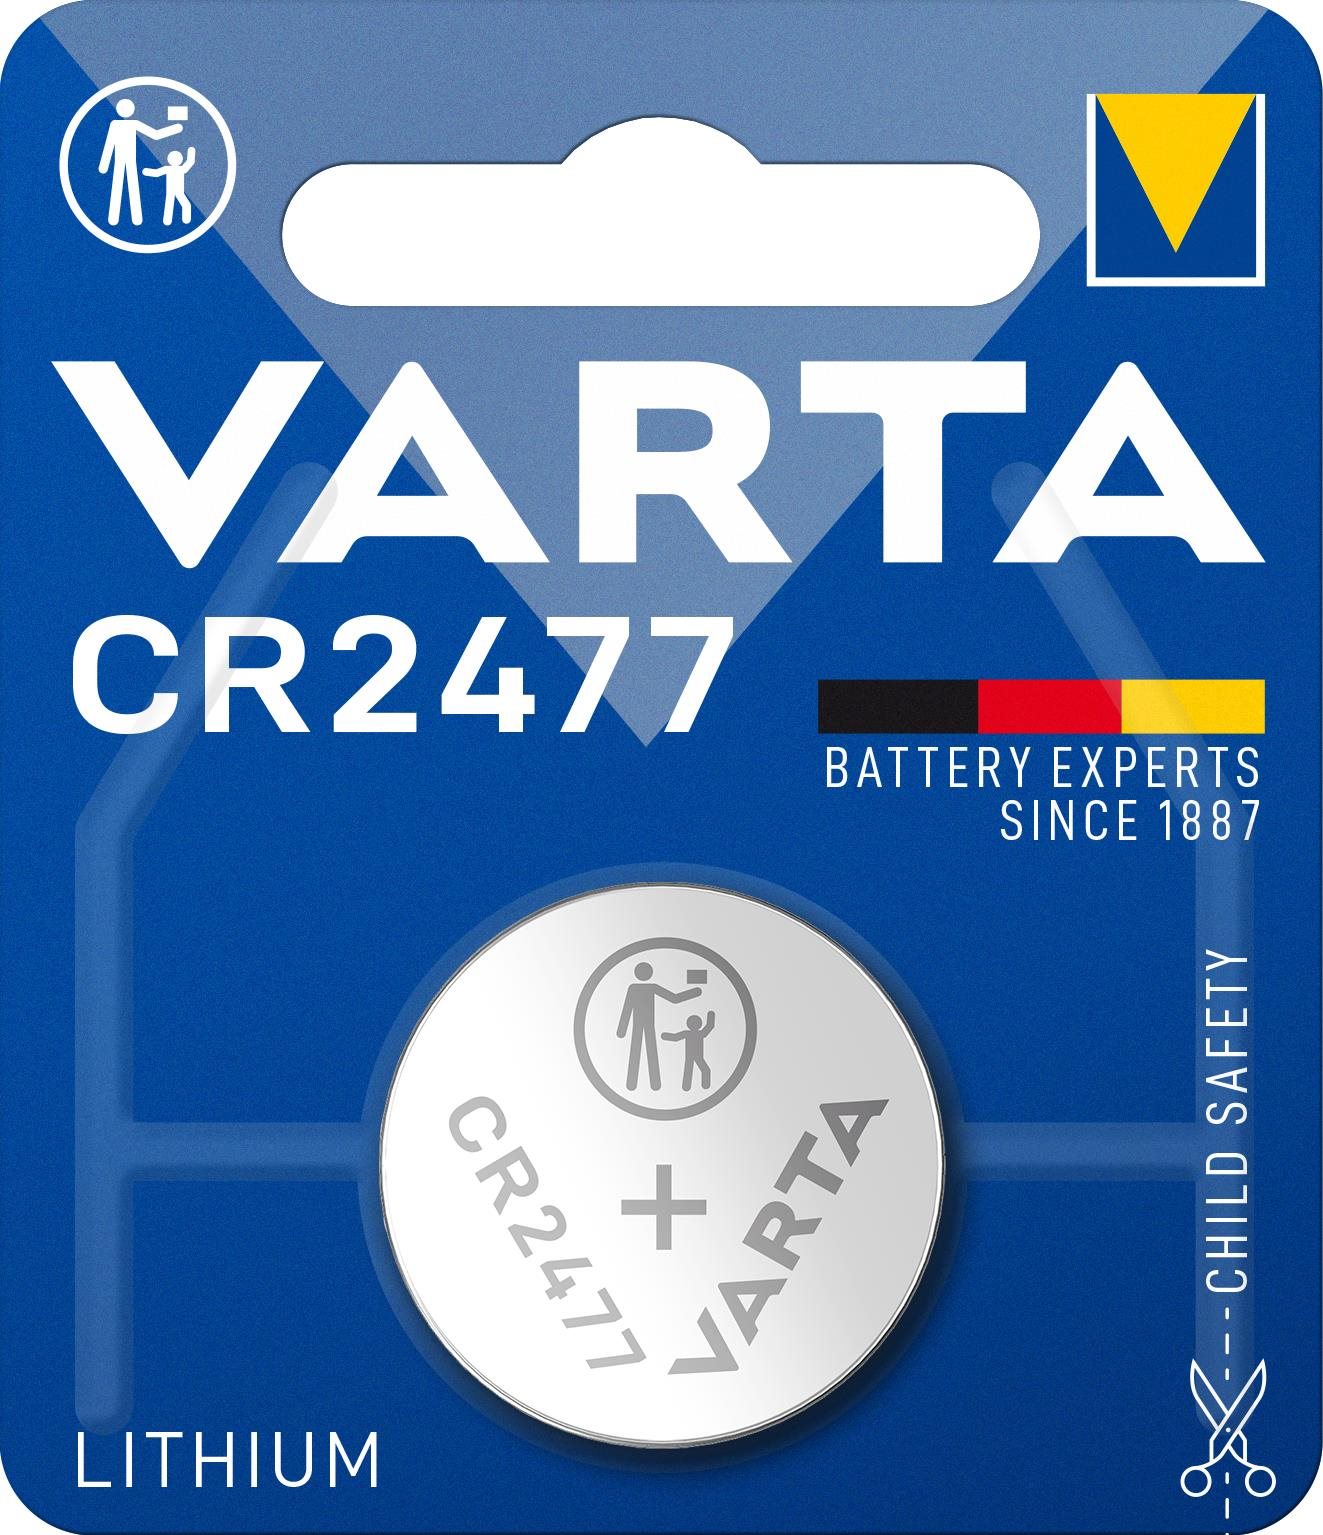 VARTA Speciális lítium elem CR 2477 - 1 db